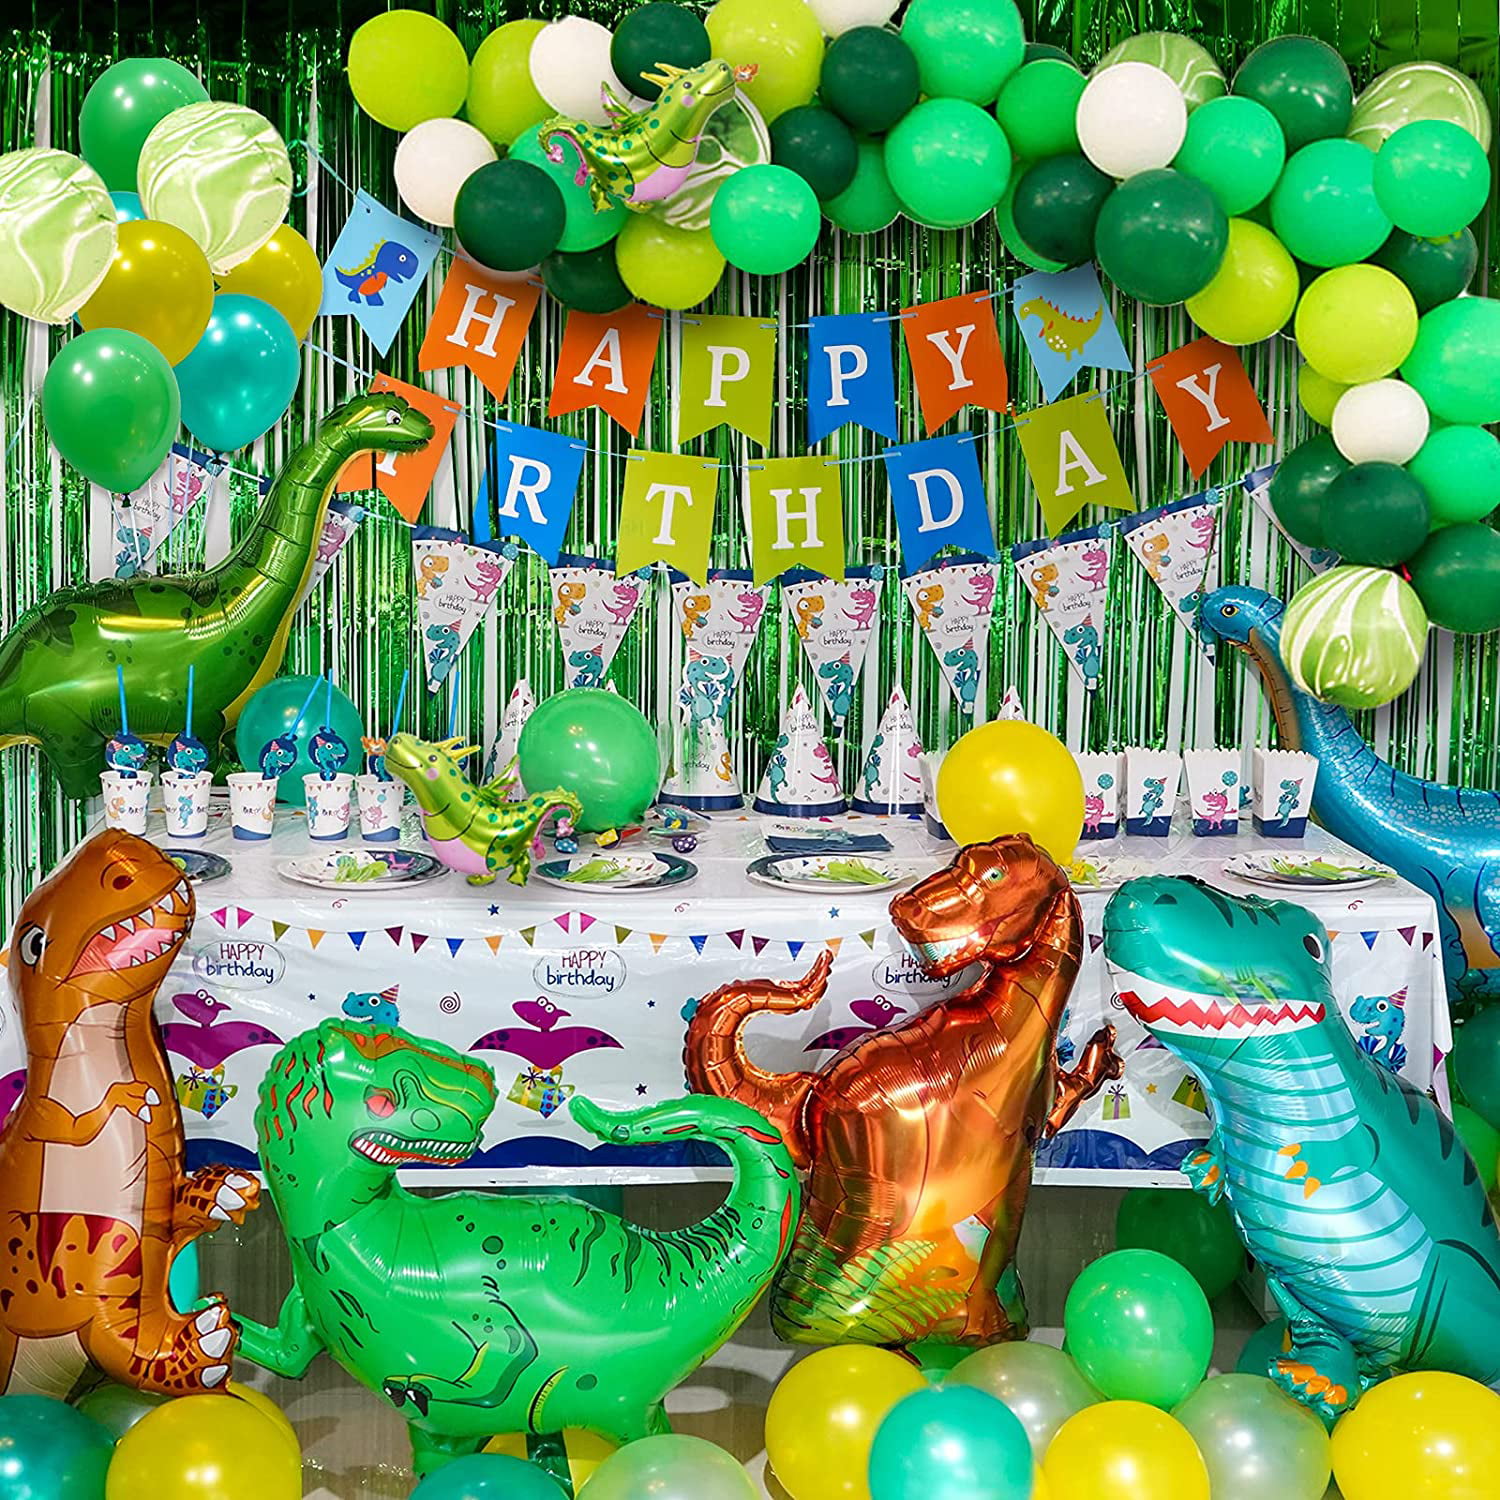 Dinosaur Birthday Decorations Party Favor Dinosaur Birthday Balloons Dinosaur Balloons Party Supplies for Kids Dinosaur Theme Birthday Party Decorations 